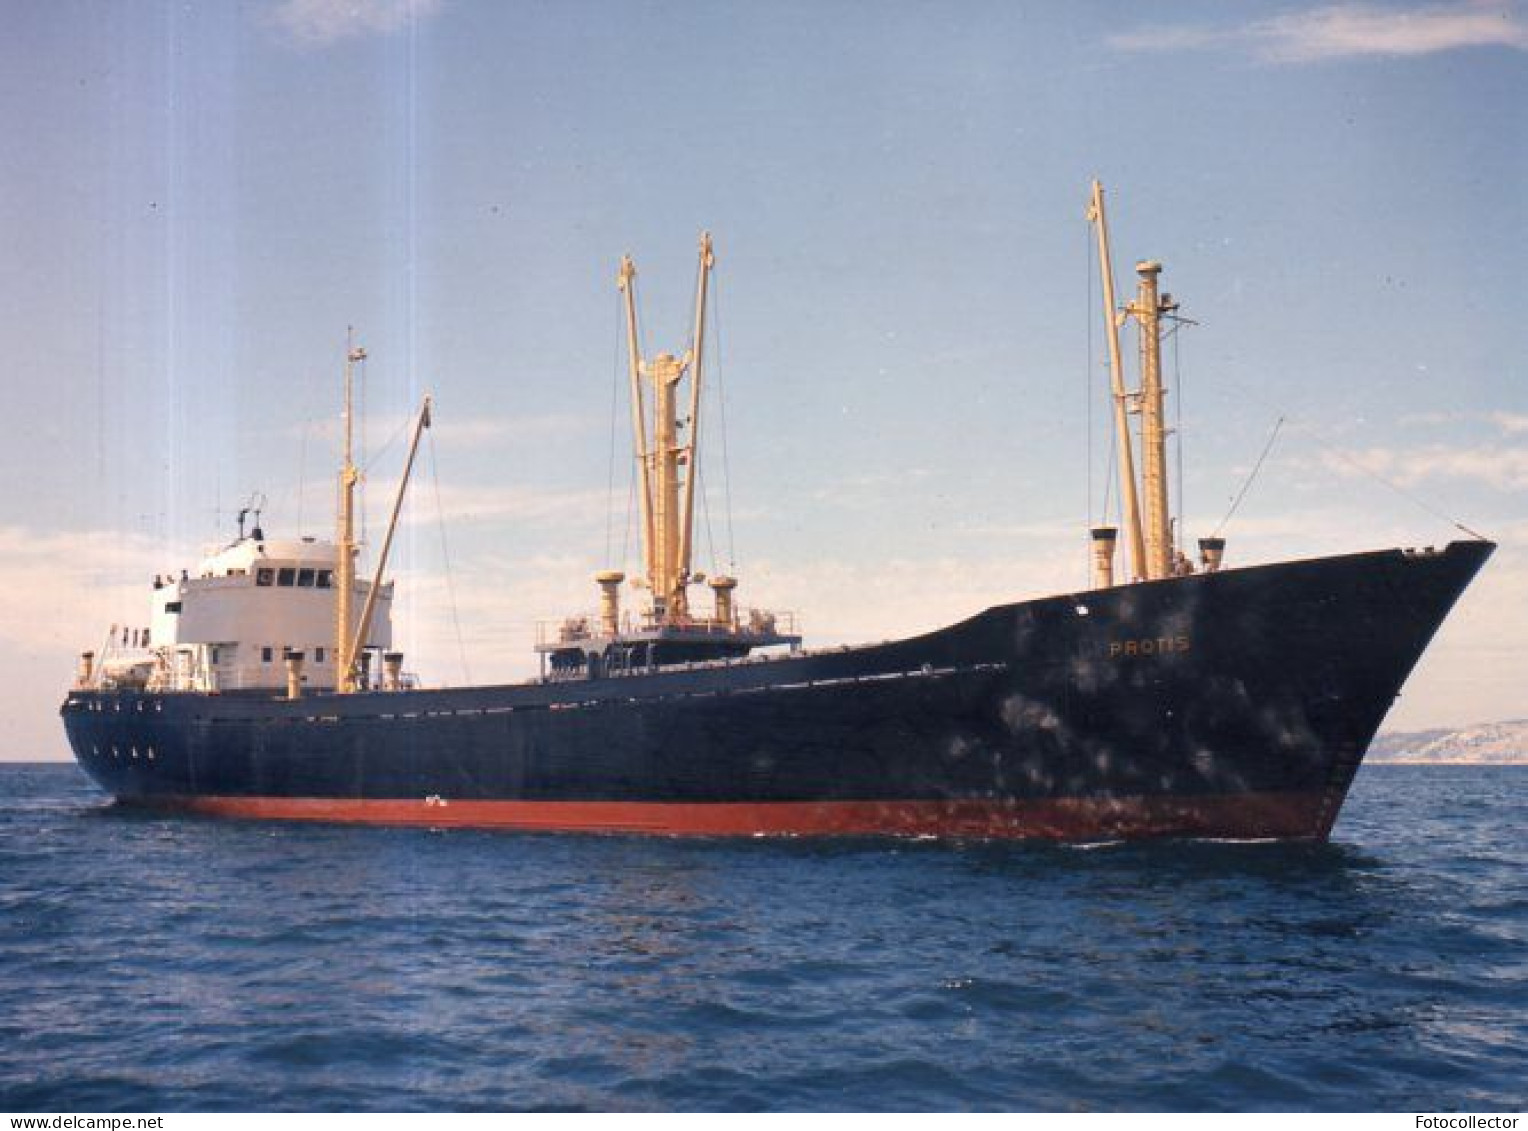 Cargo Protis - Boats